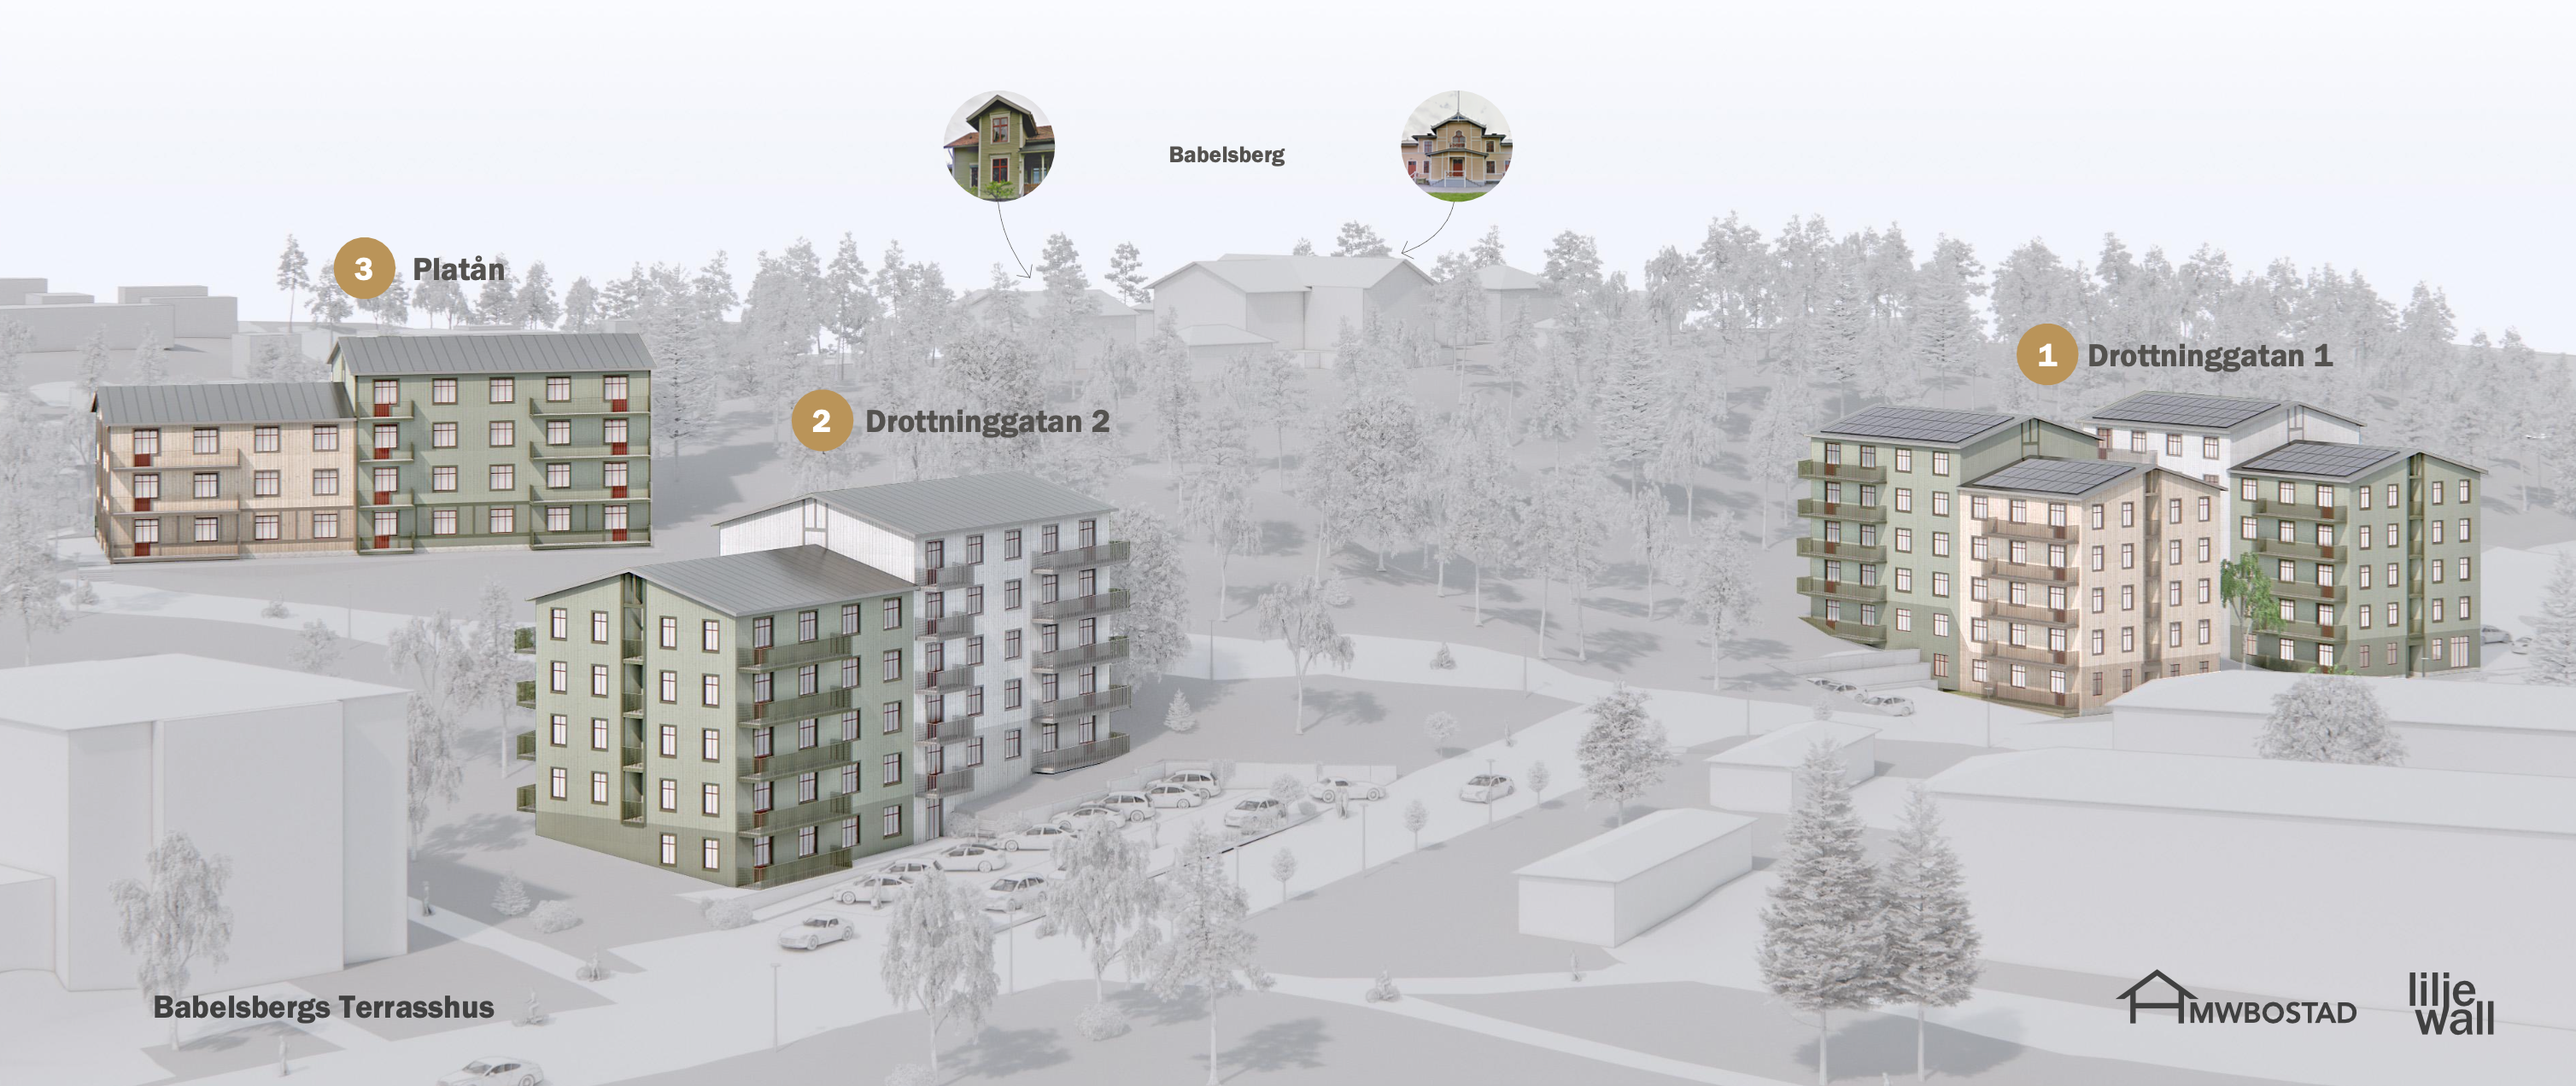 skiss på vart de nya husen Babelsberg ska ligga och kan se ut